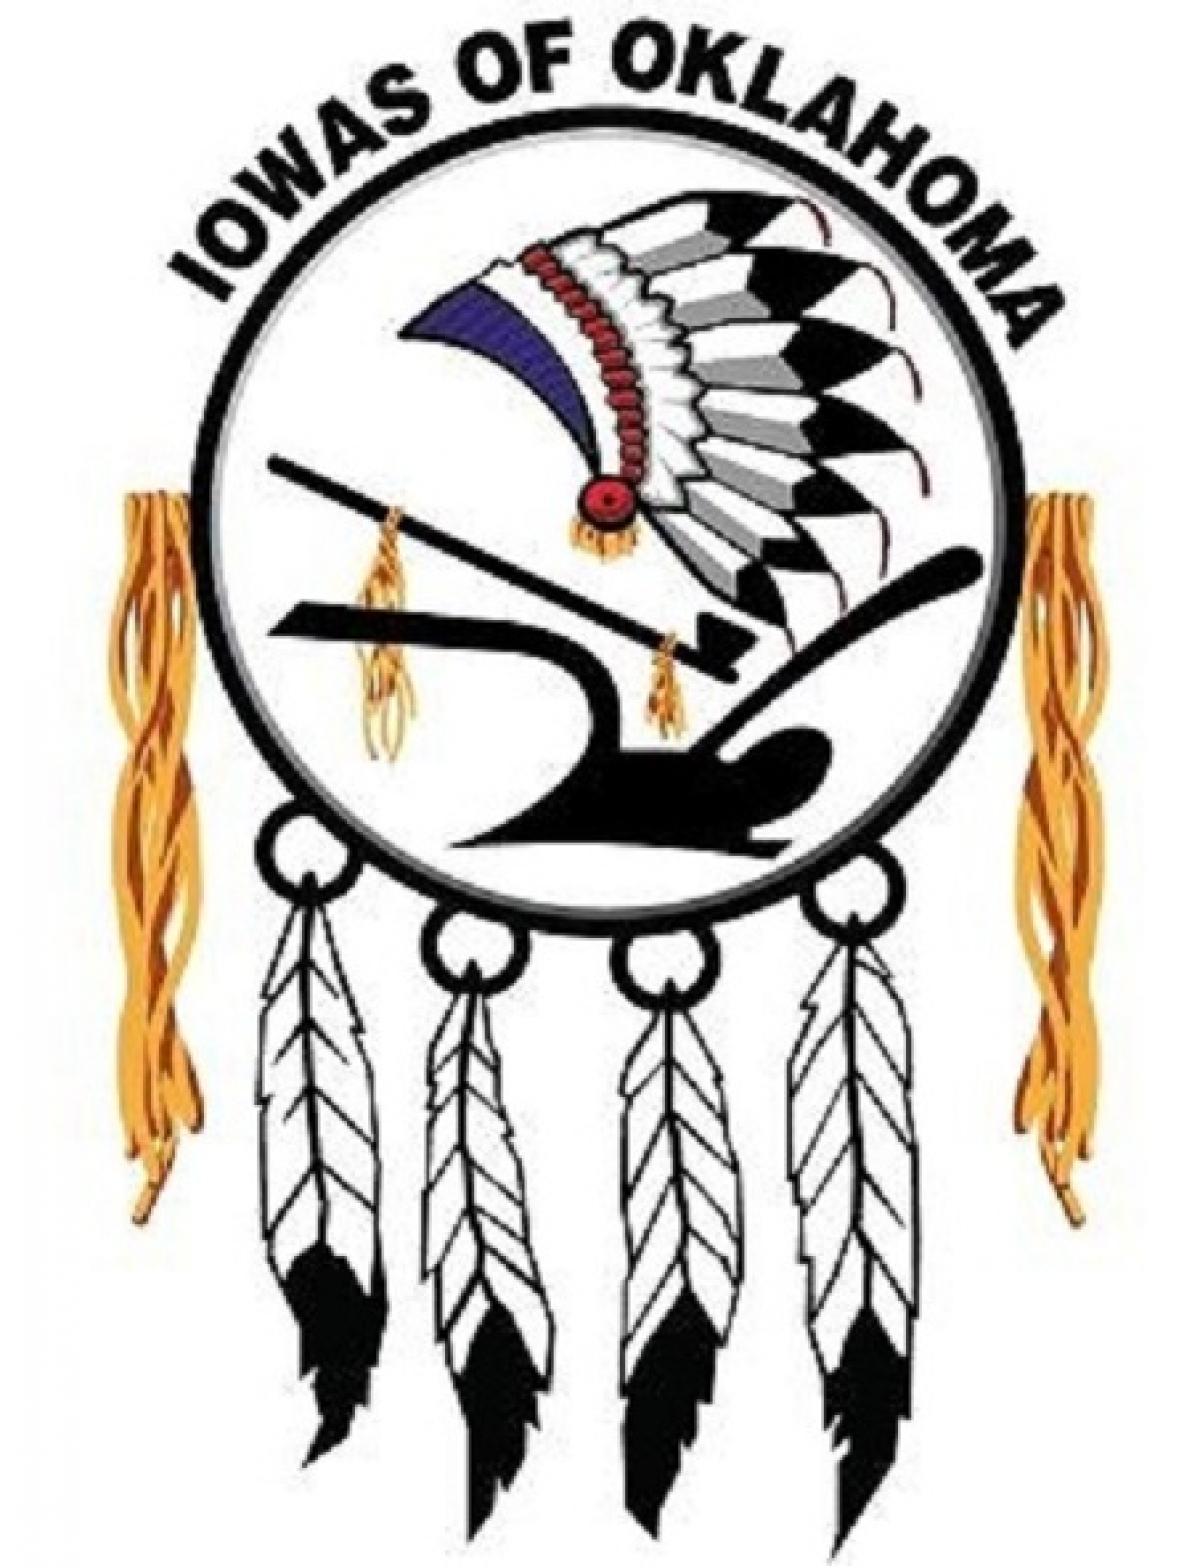 OK, Grove, Headstone Symbols and Meanings, Iowa Tribe of Oklahoma